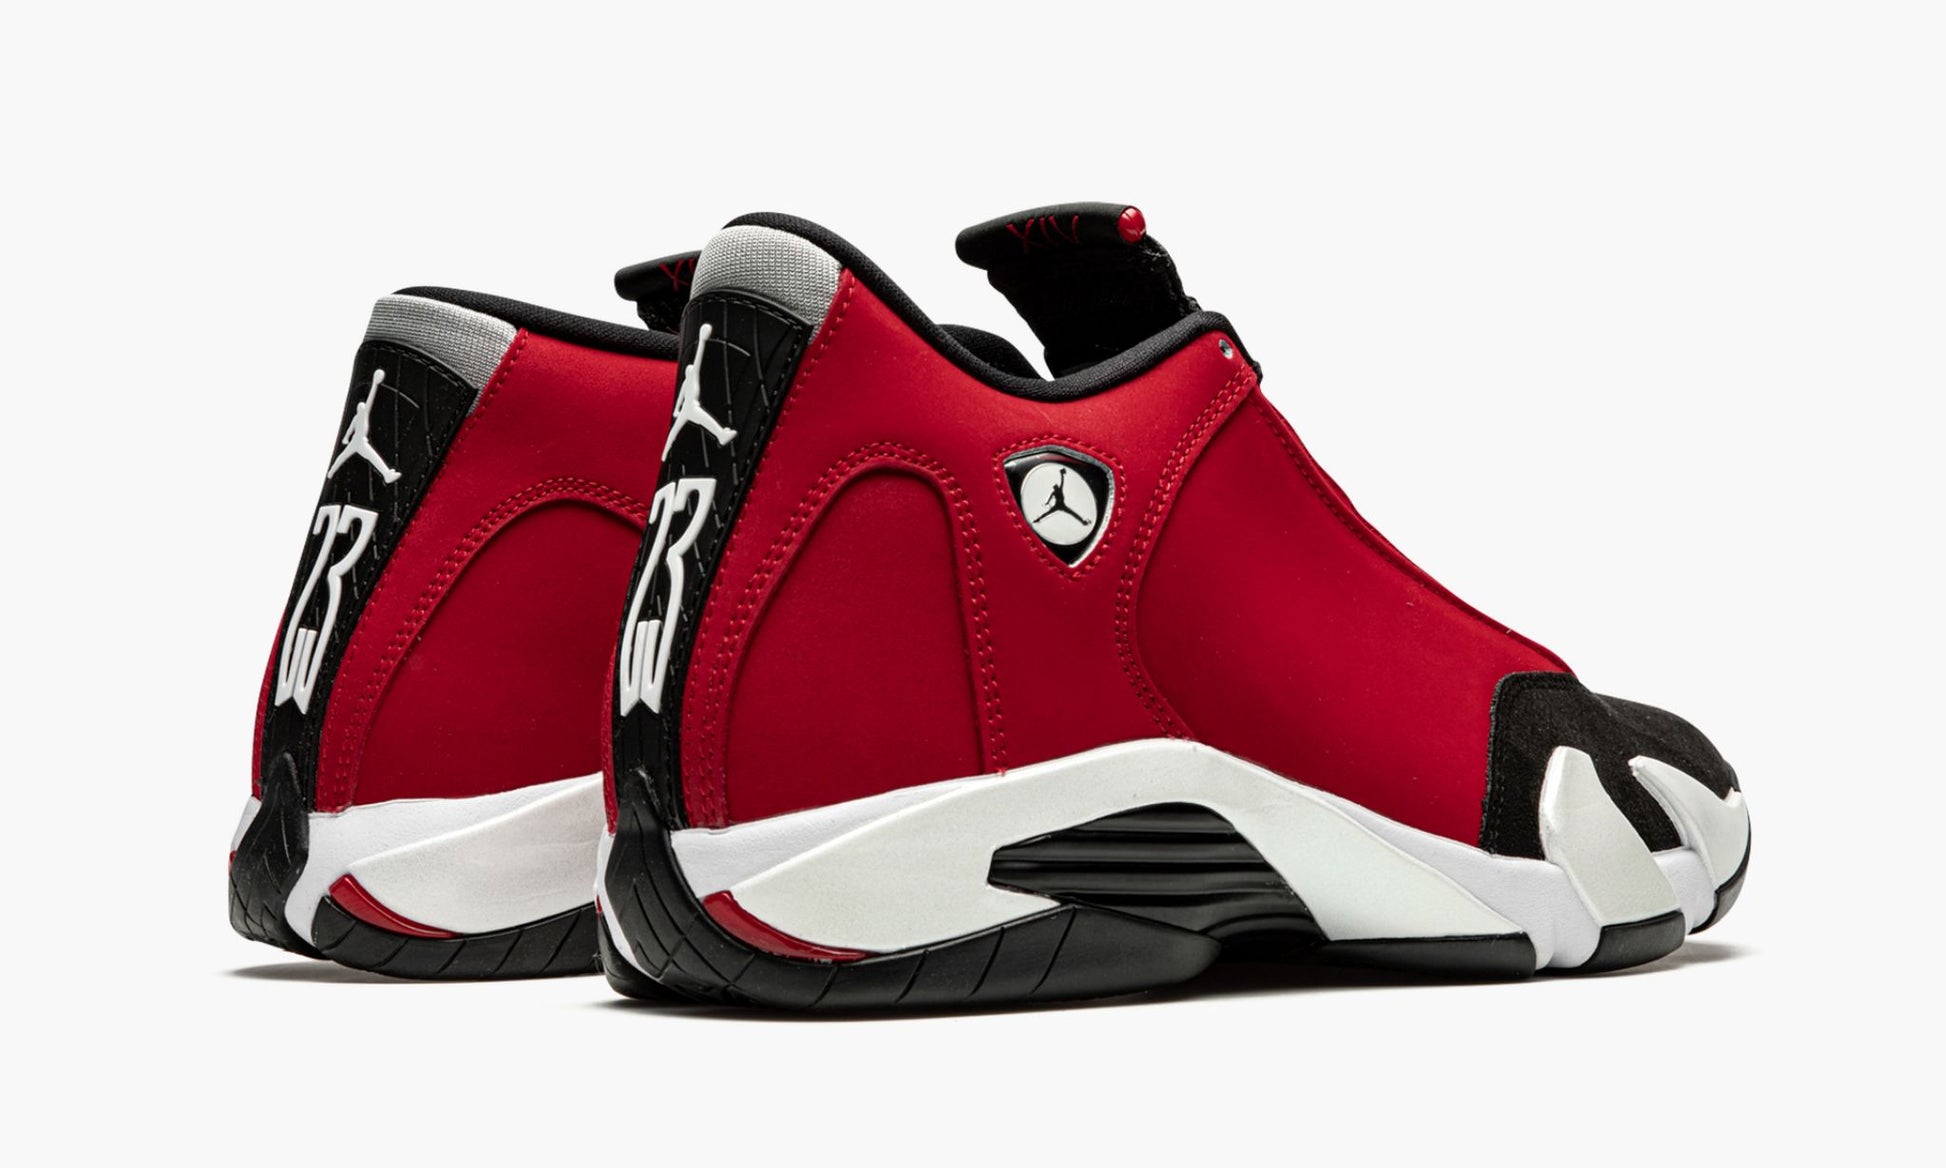 Air Jordan 14 Retro "Gym Red"